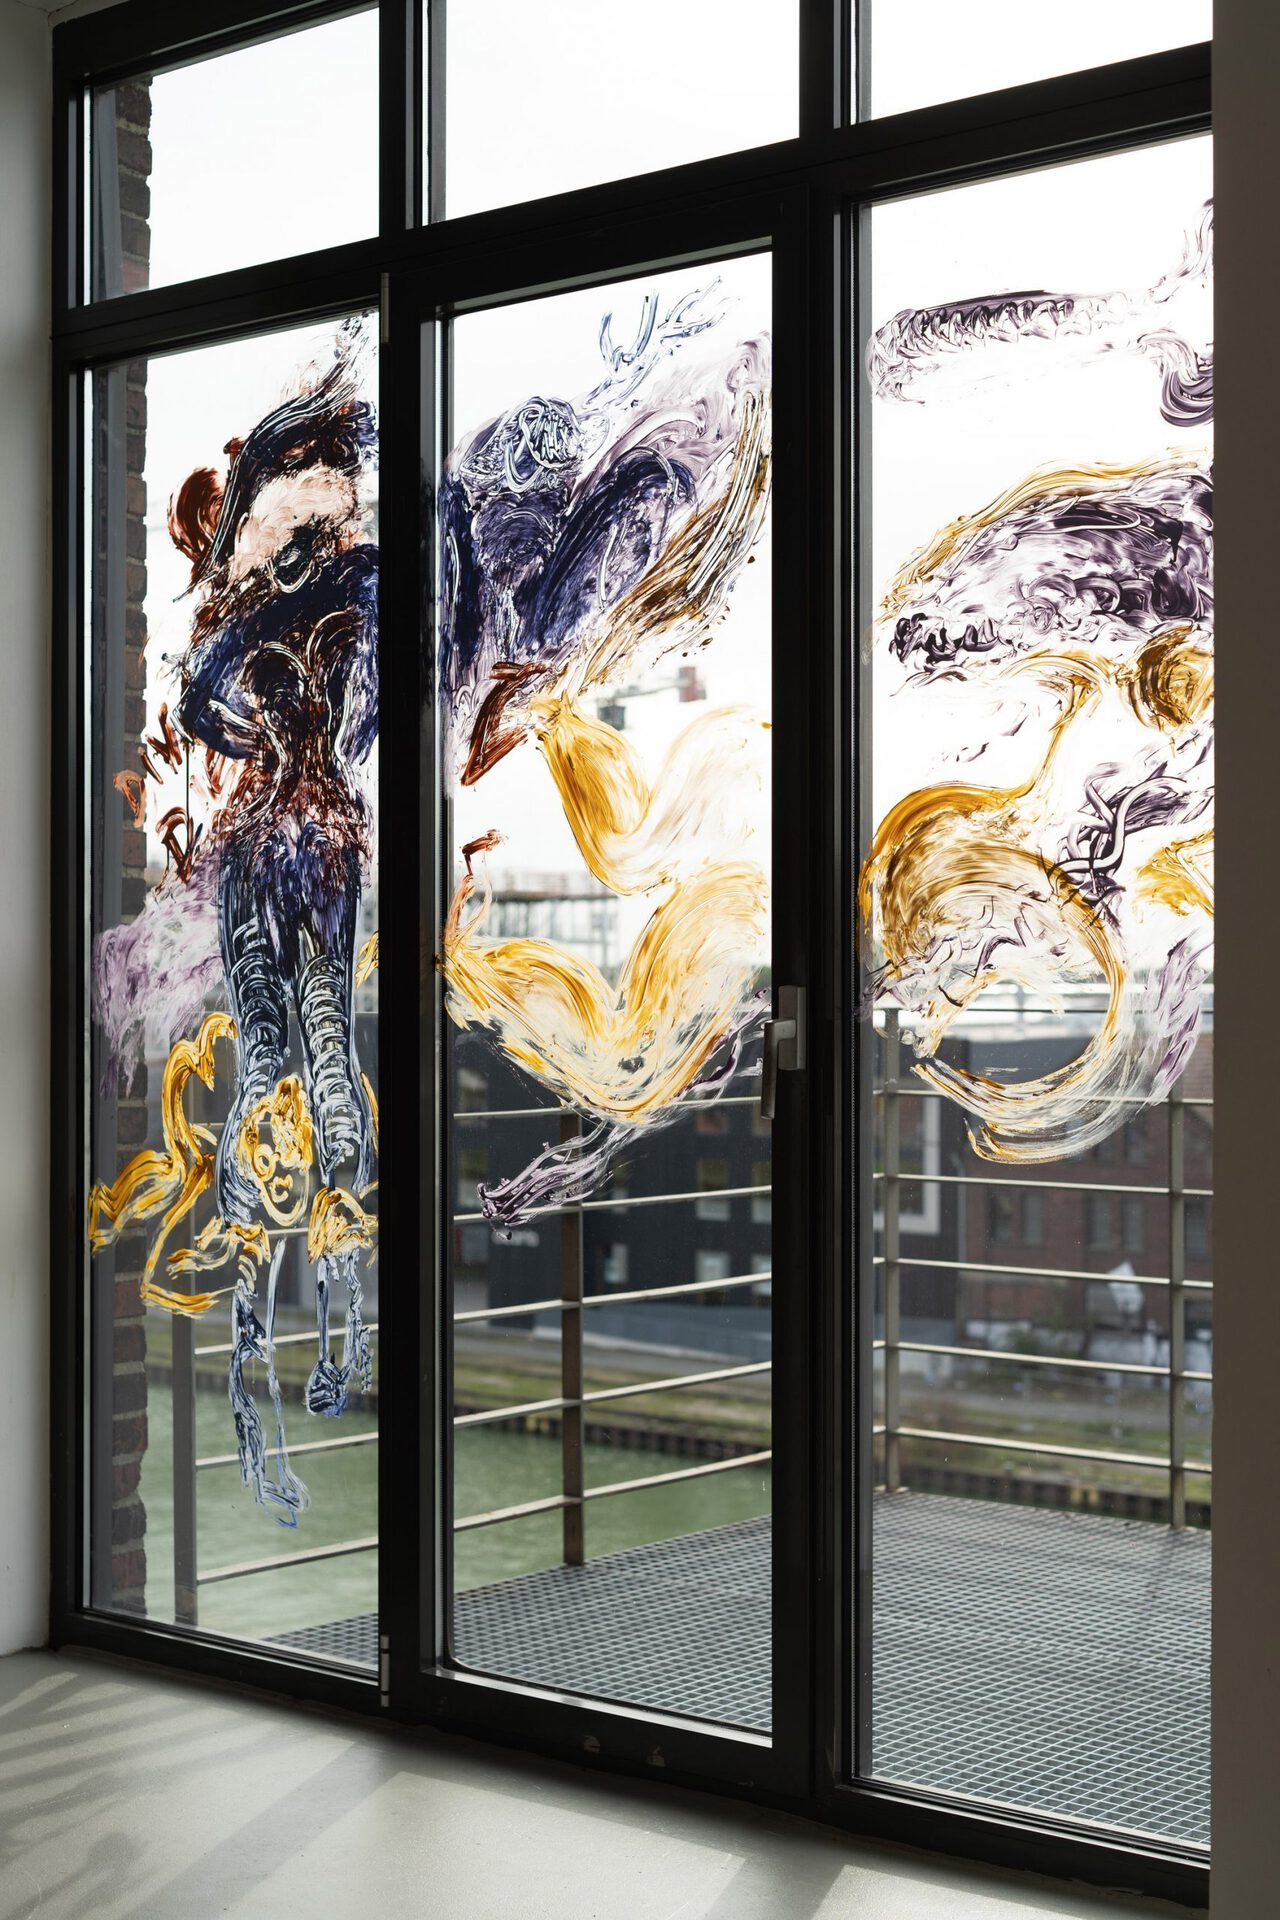 Charlott Weise, Divadienst (Detail), 2021. Exhibition view Tinted Glass, Kunsthalle Münster 2021. Courtesy the artist